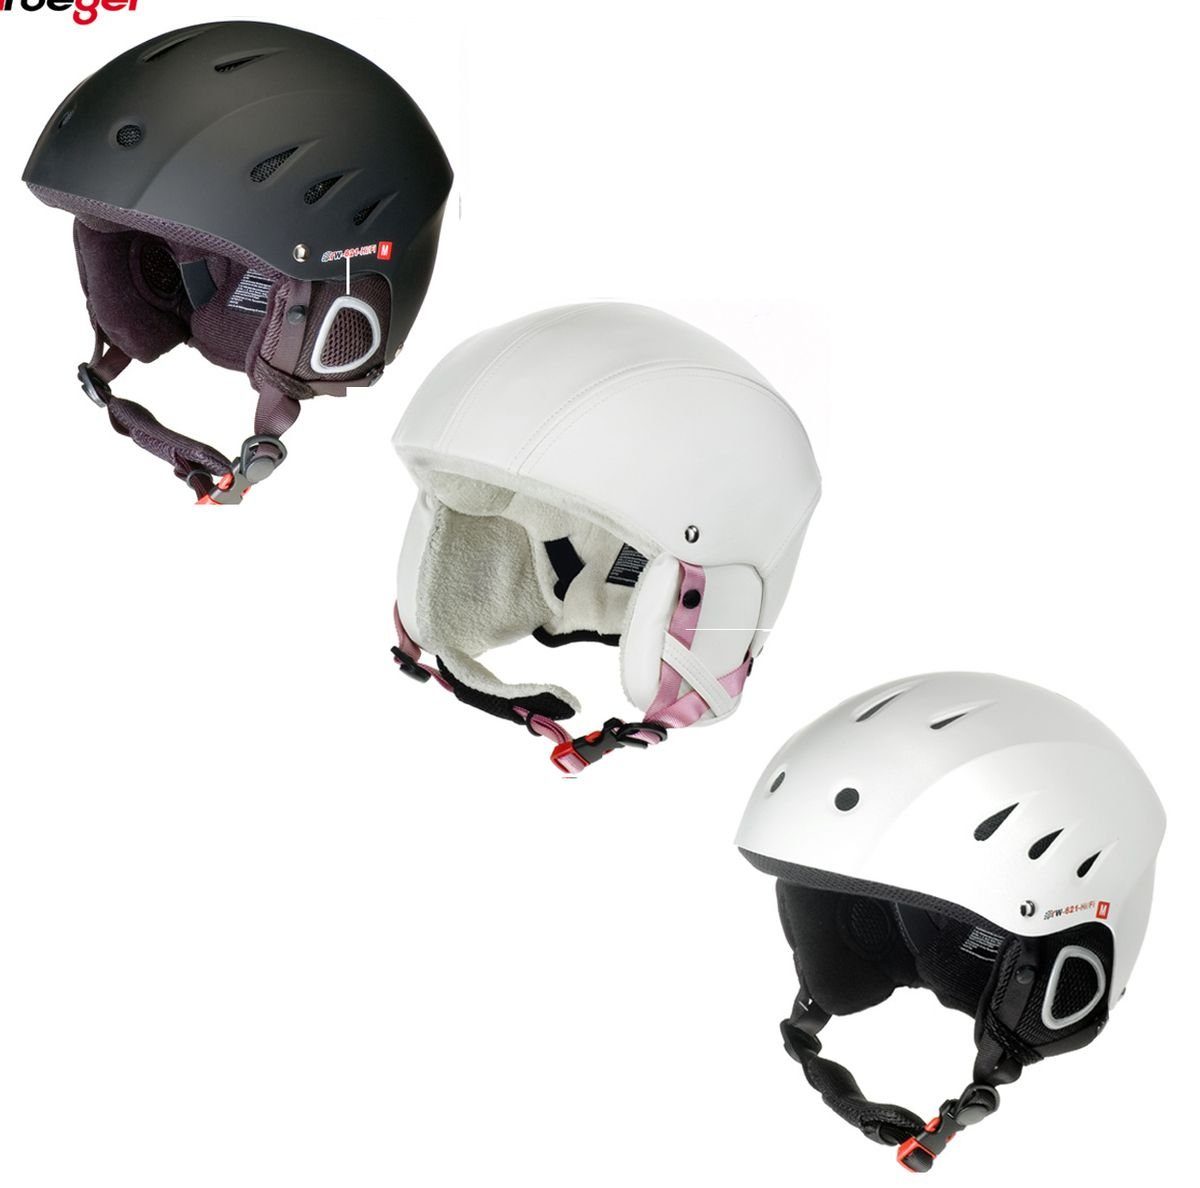 White/PU Skihelm Snowboard BergsportRW-621-HIFI Lautsprechern Skisport Skihelm XL mit Ski Wh/Pu rueger-helmets Snowboardhelm RW-621